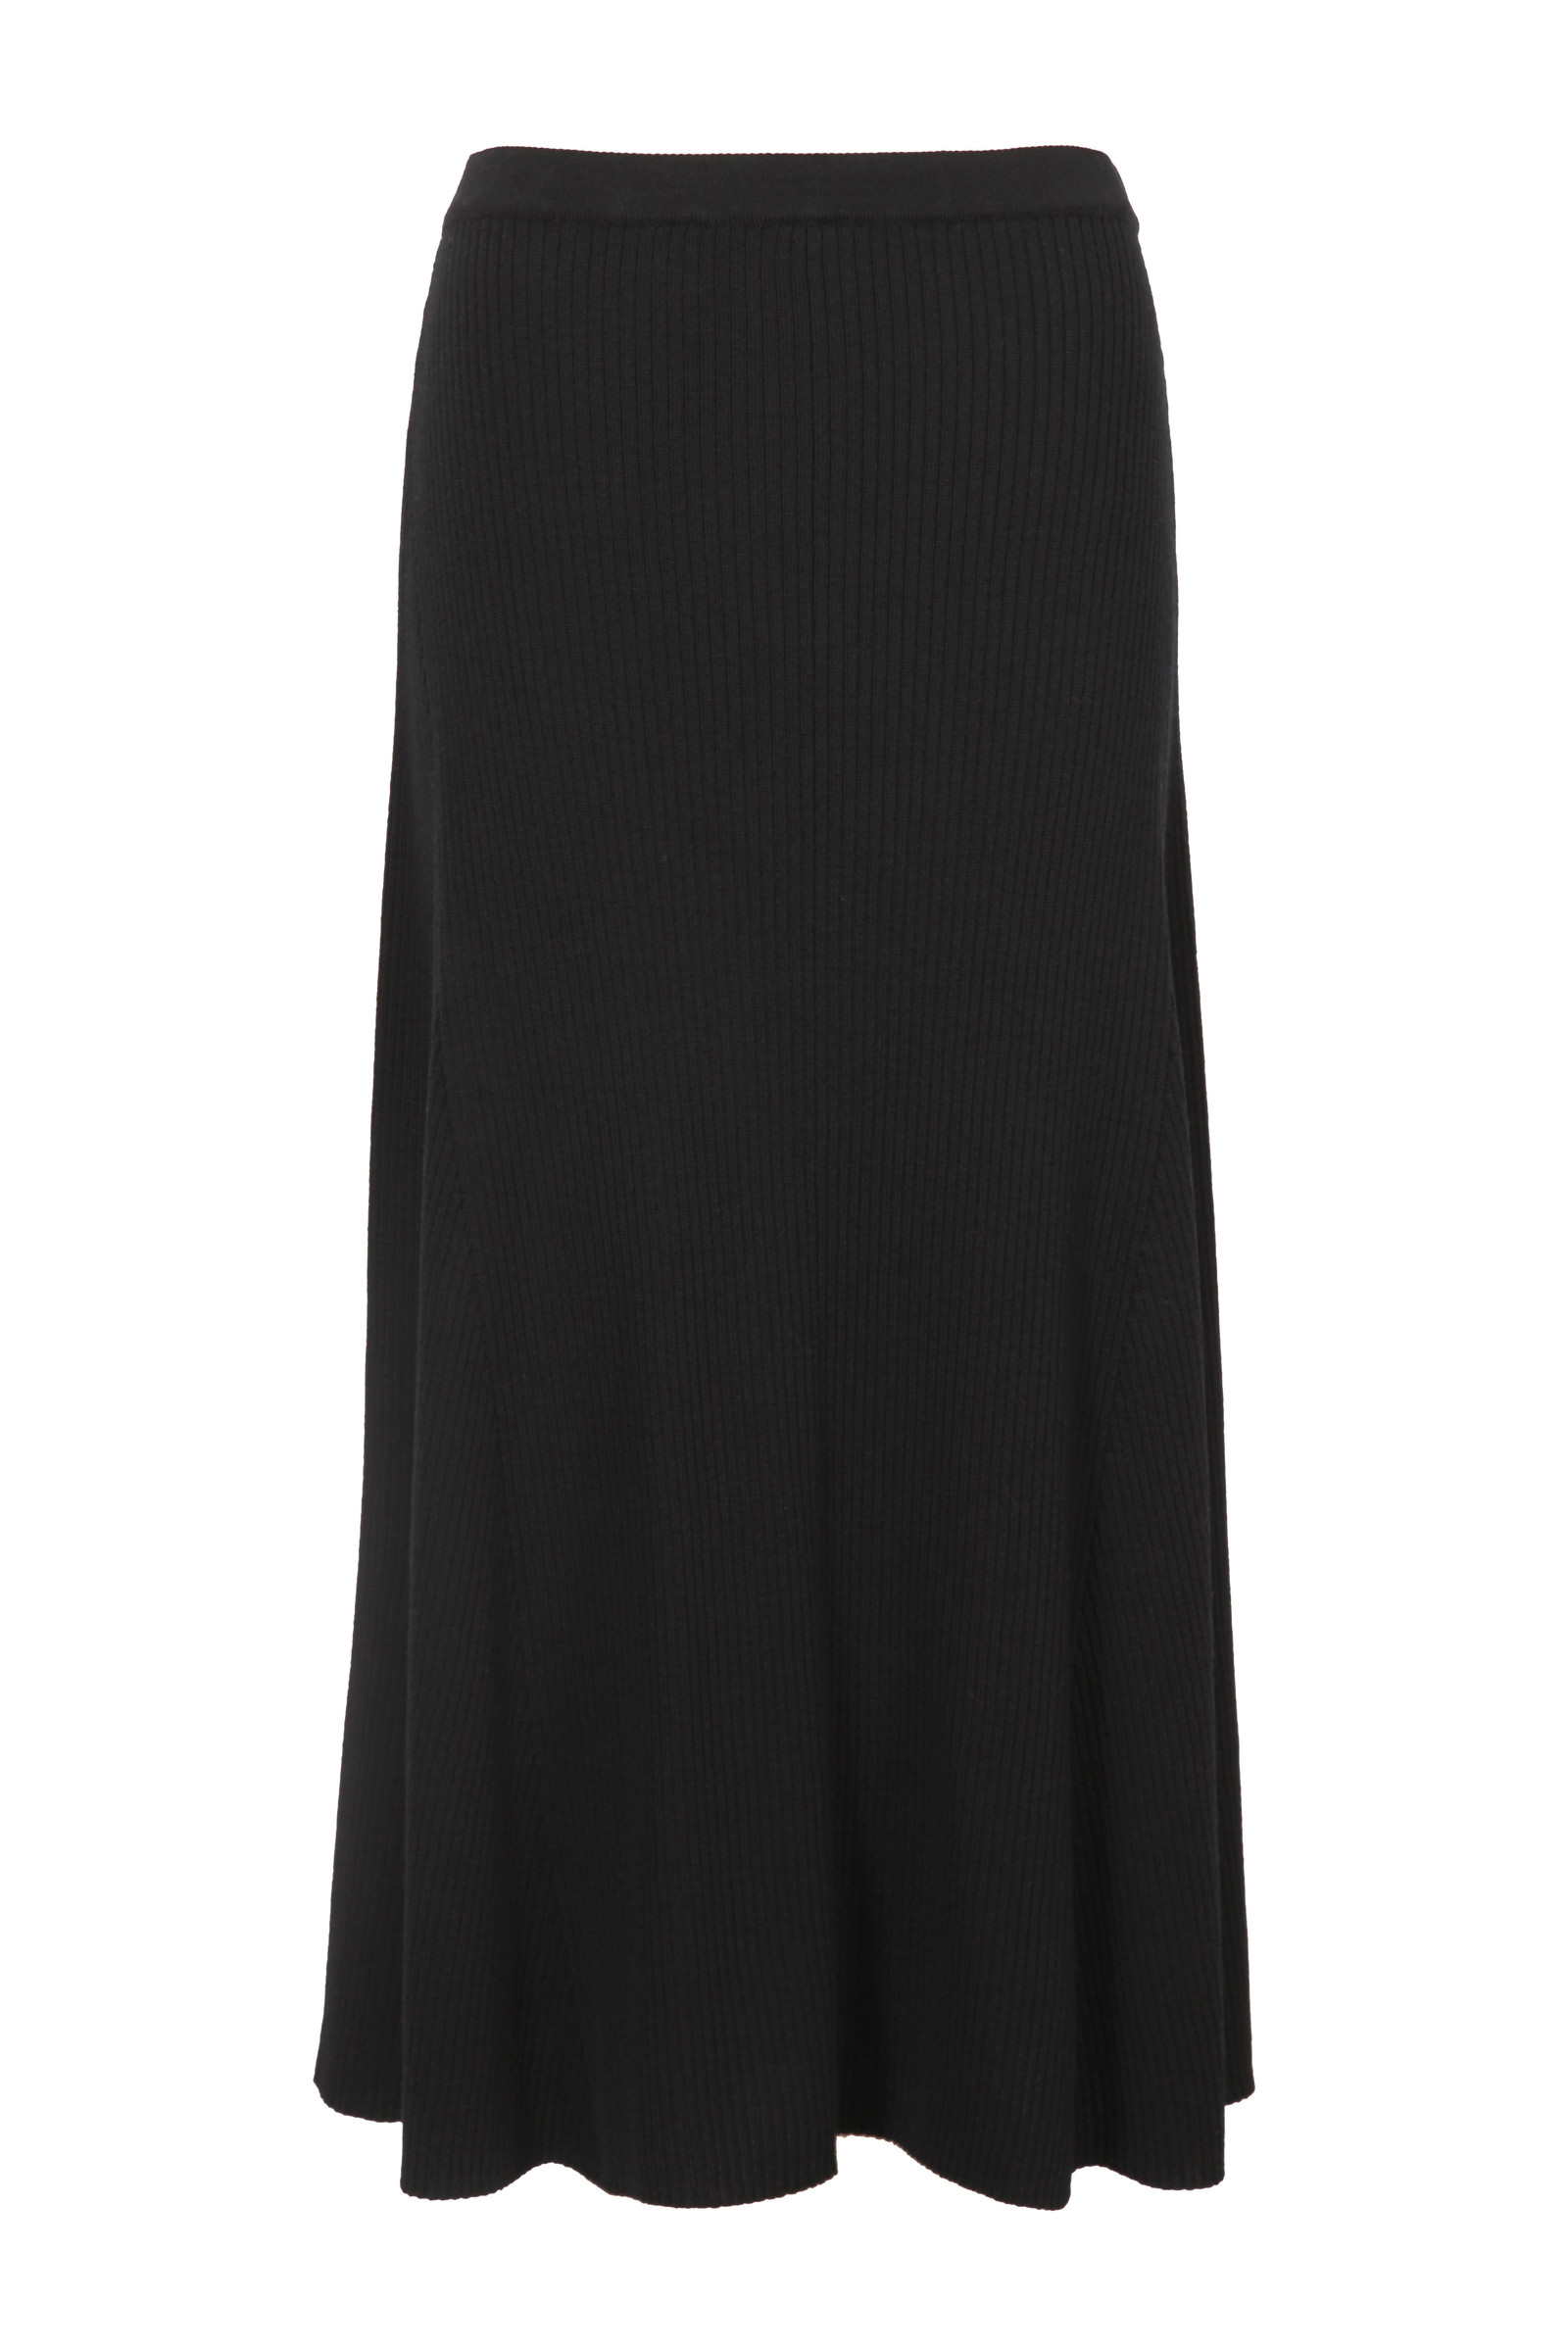 IVKO  Woman IVKO Outlet - Solid Skirt Black